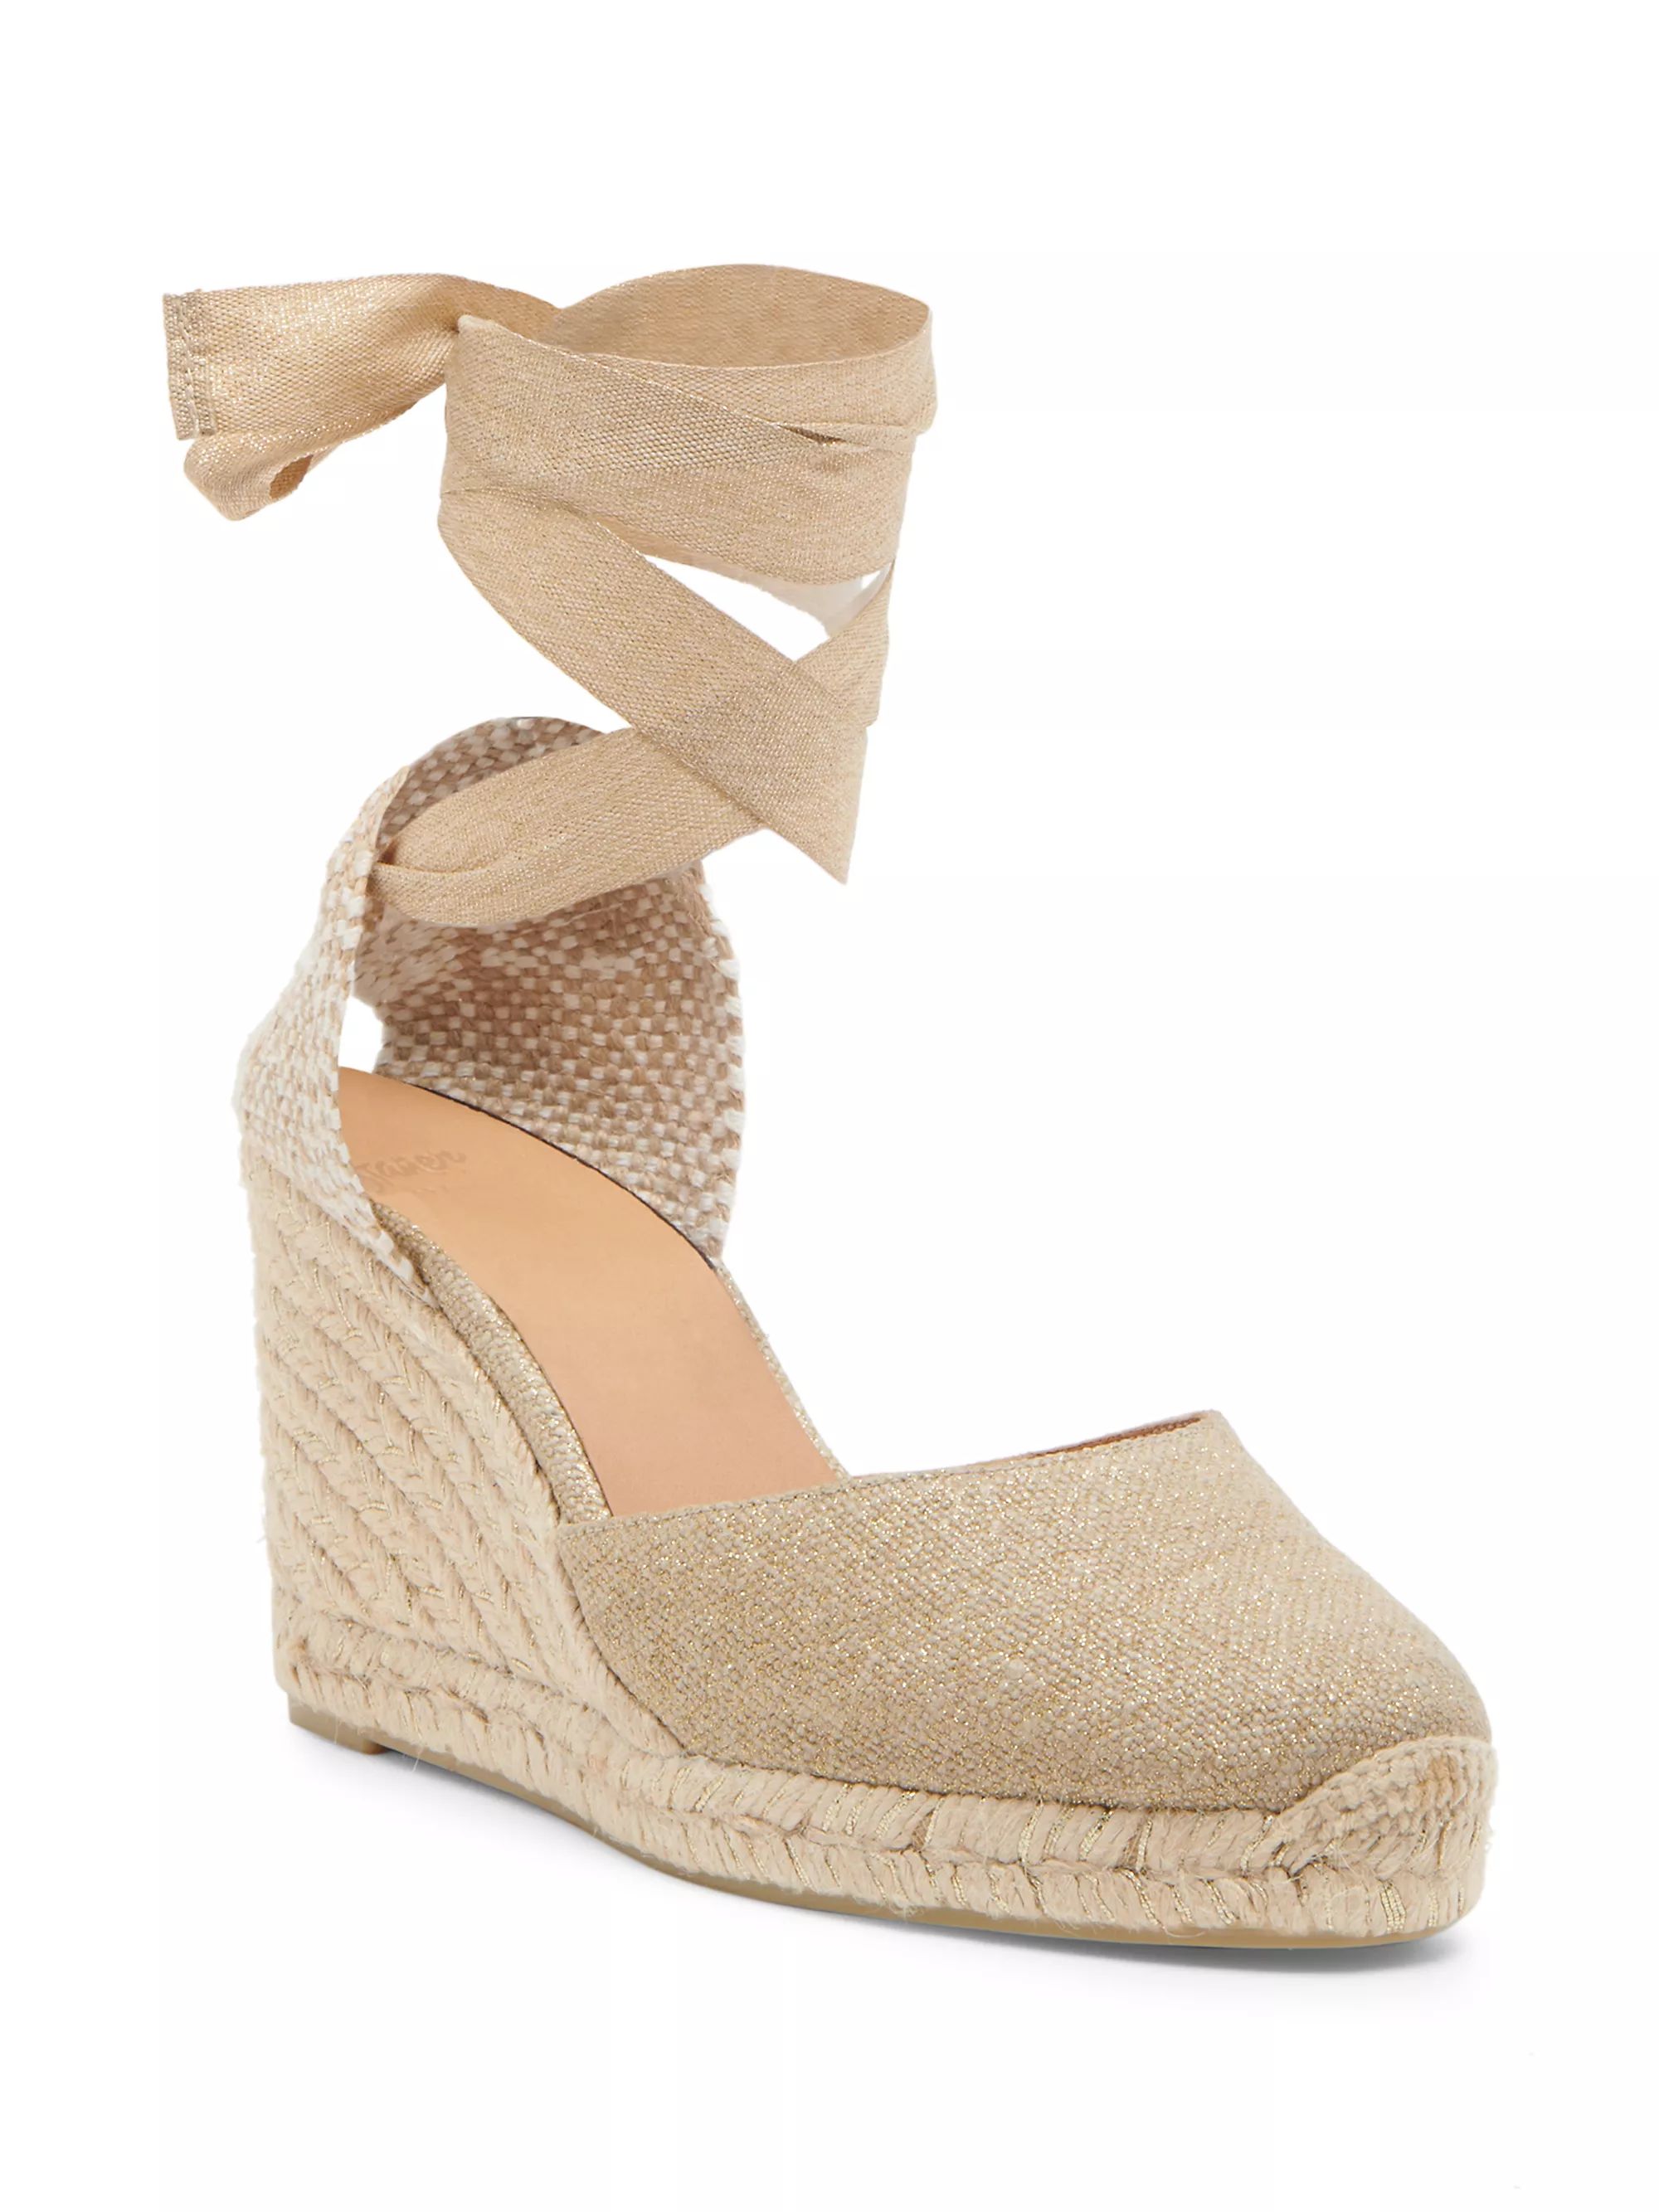 ShoesShop By CategoryCastañerCarina 8 Espadrille Wedge Sandals$195 | Saks Fifth Avenue